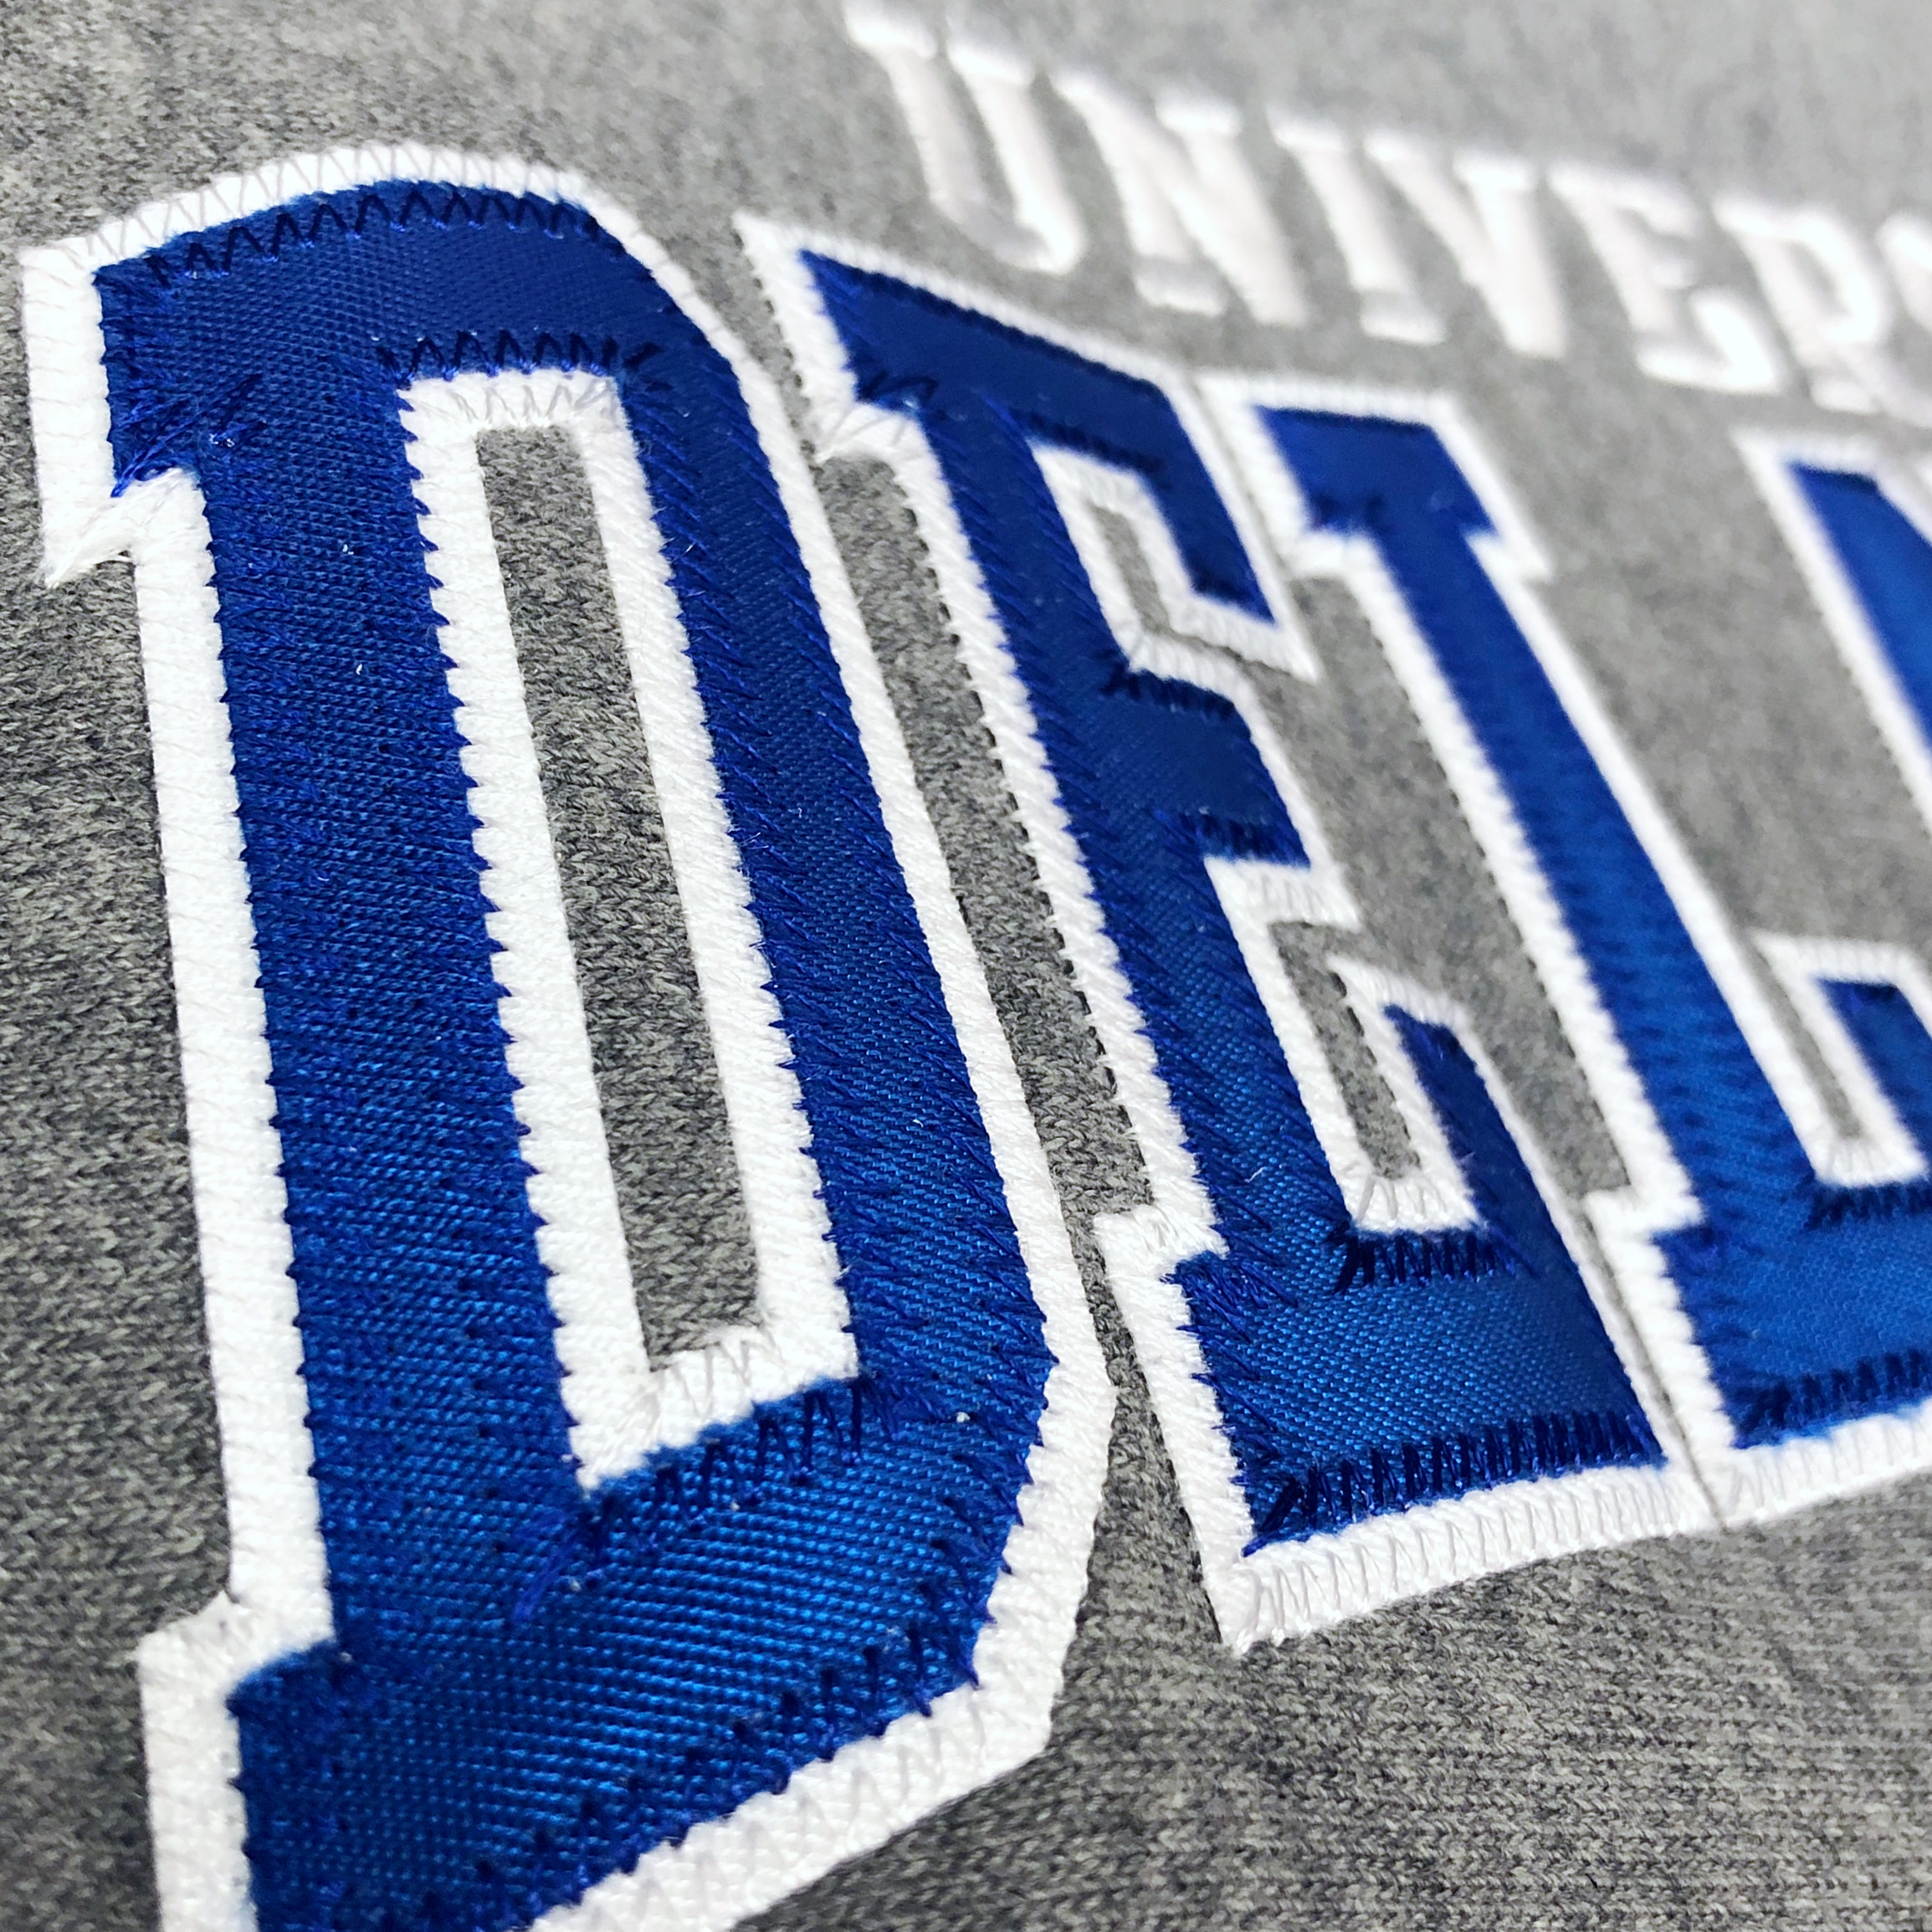 University of Delaware Alumni Embroidered Hoodie Sweatshirt – National 5  and 10